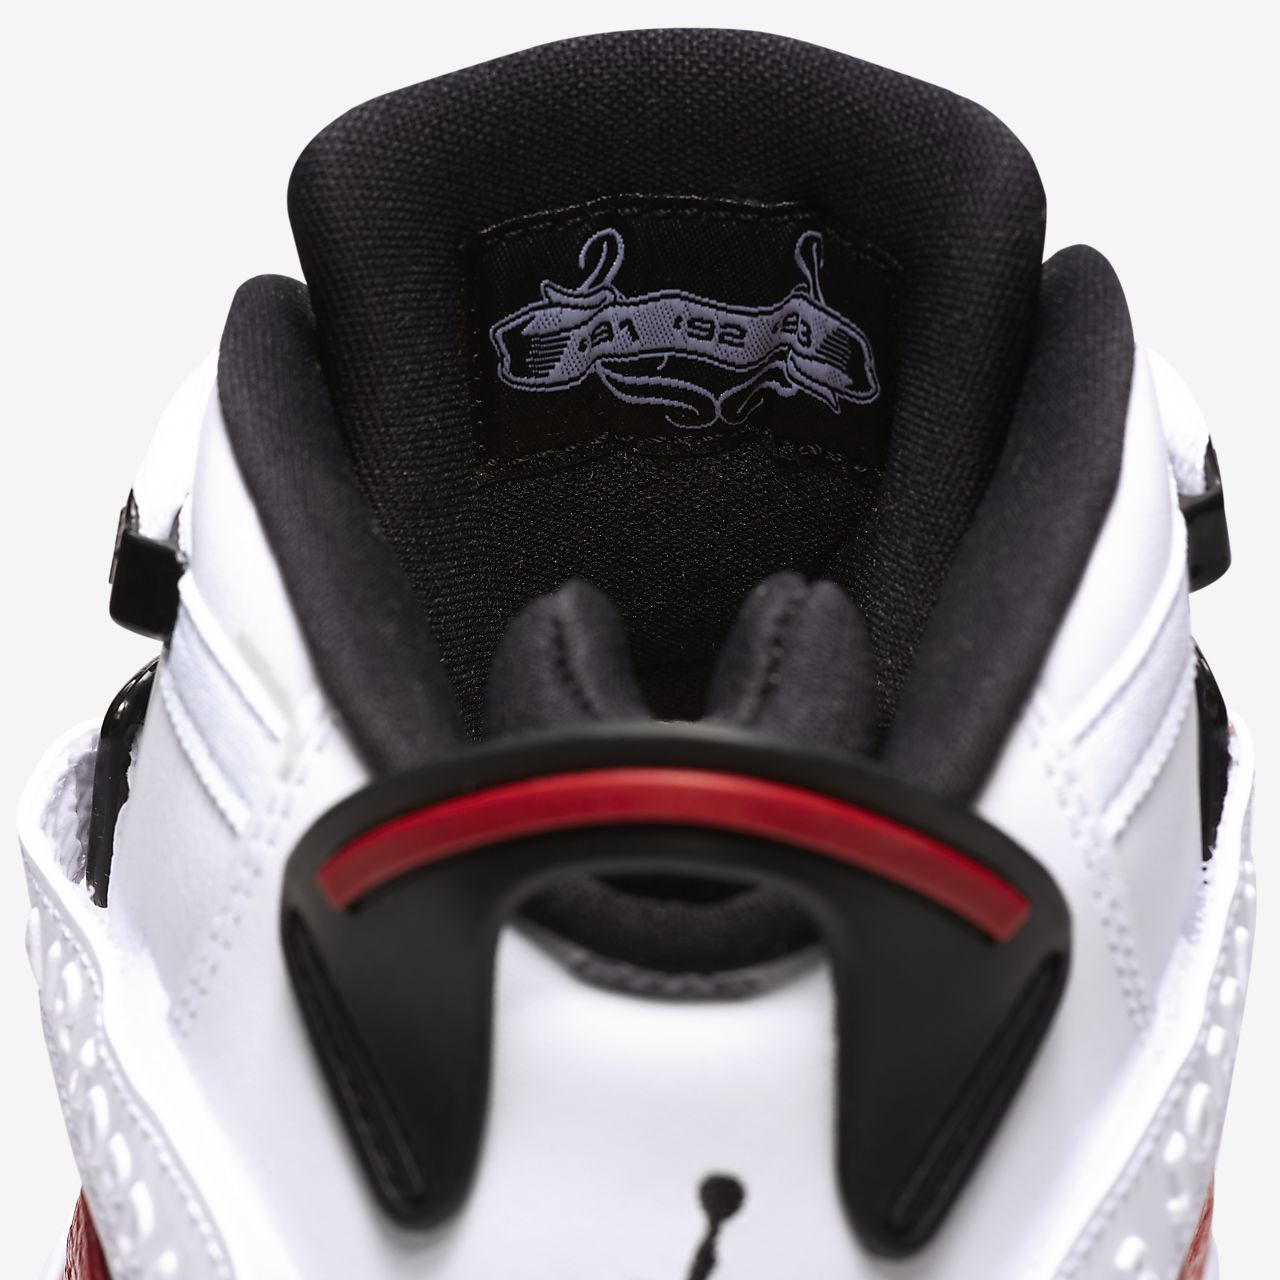 Mens Air Jordan 9 Commemorative Edition Black Red shoes